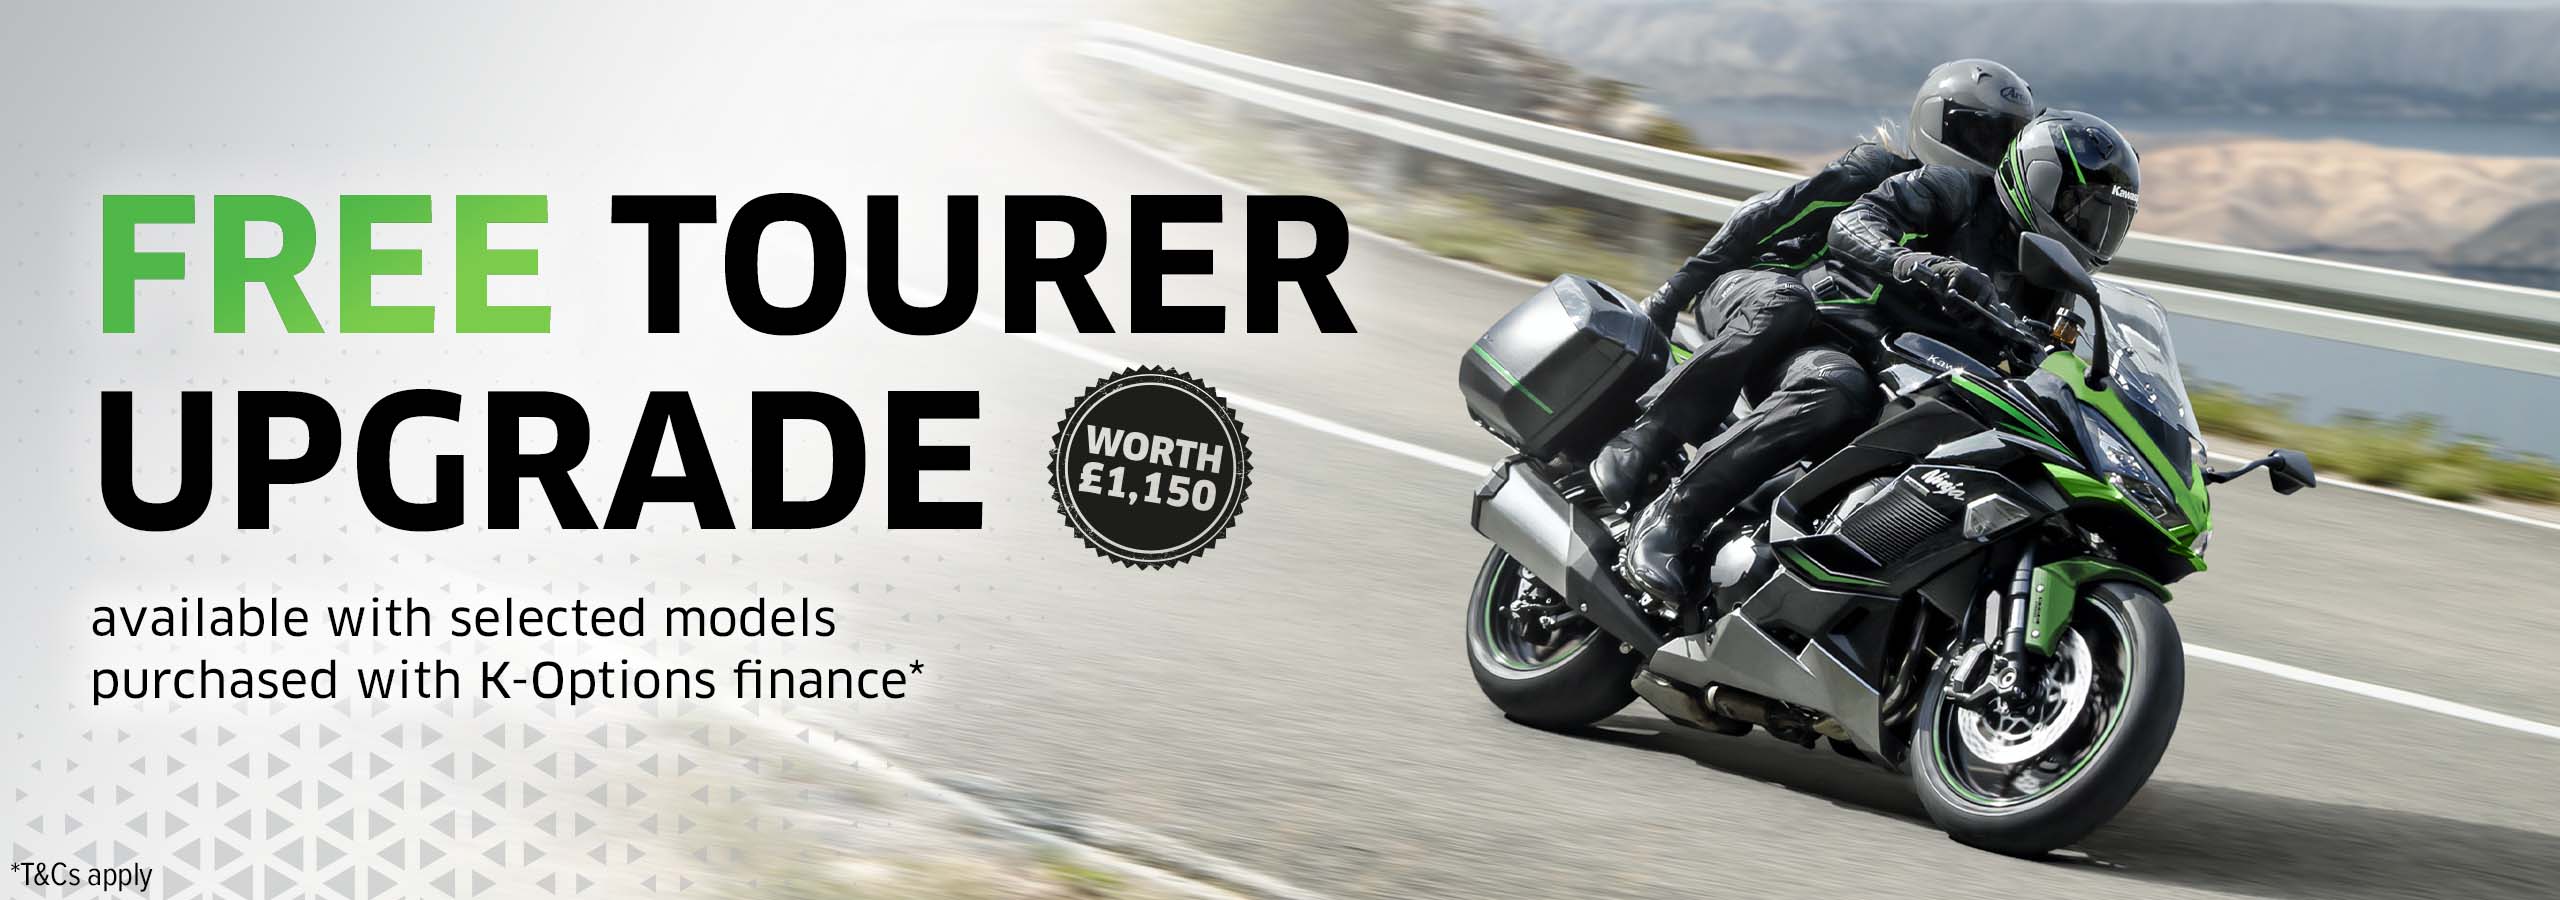 New Free Tourer Upgrade Offer on selected Kawasaki Motorcycles at Laguna Motorcycles